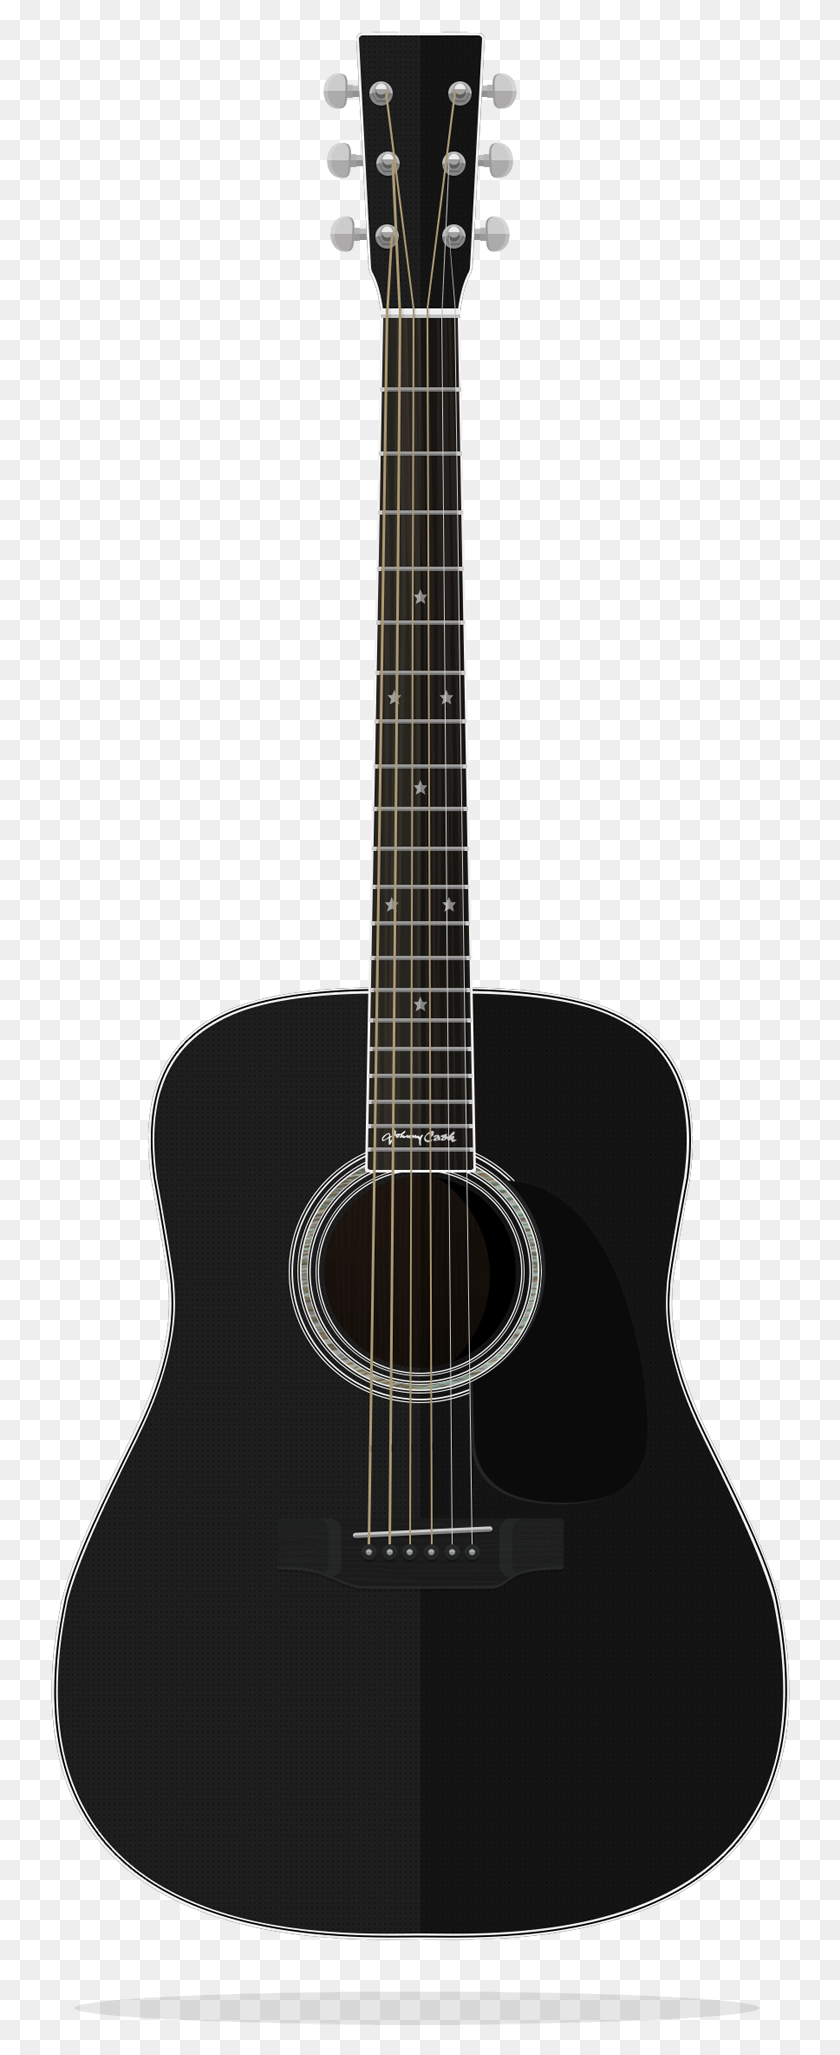 740x1995 Descargar Png Guitarra Acústica Flatguitars D Johnny, Guitarra Acústica, Instrumento Musical, Bajo Hd Png